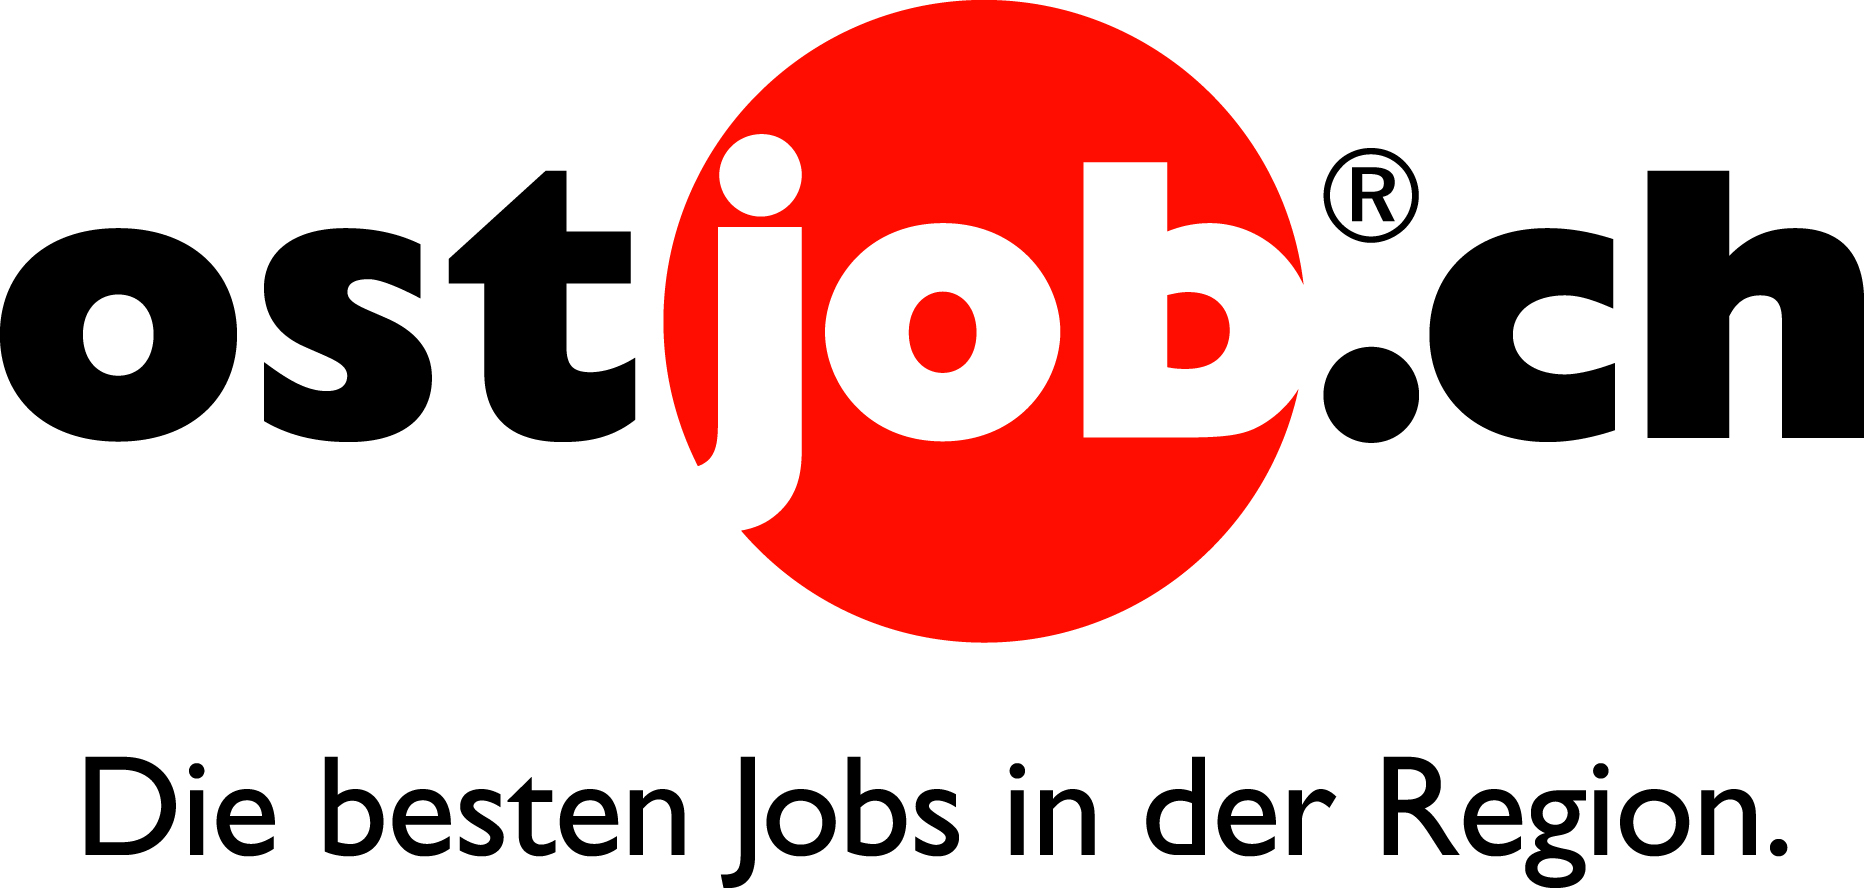 Unser Partner - ostjob.ch